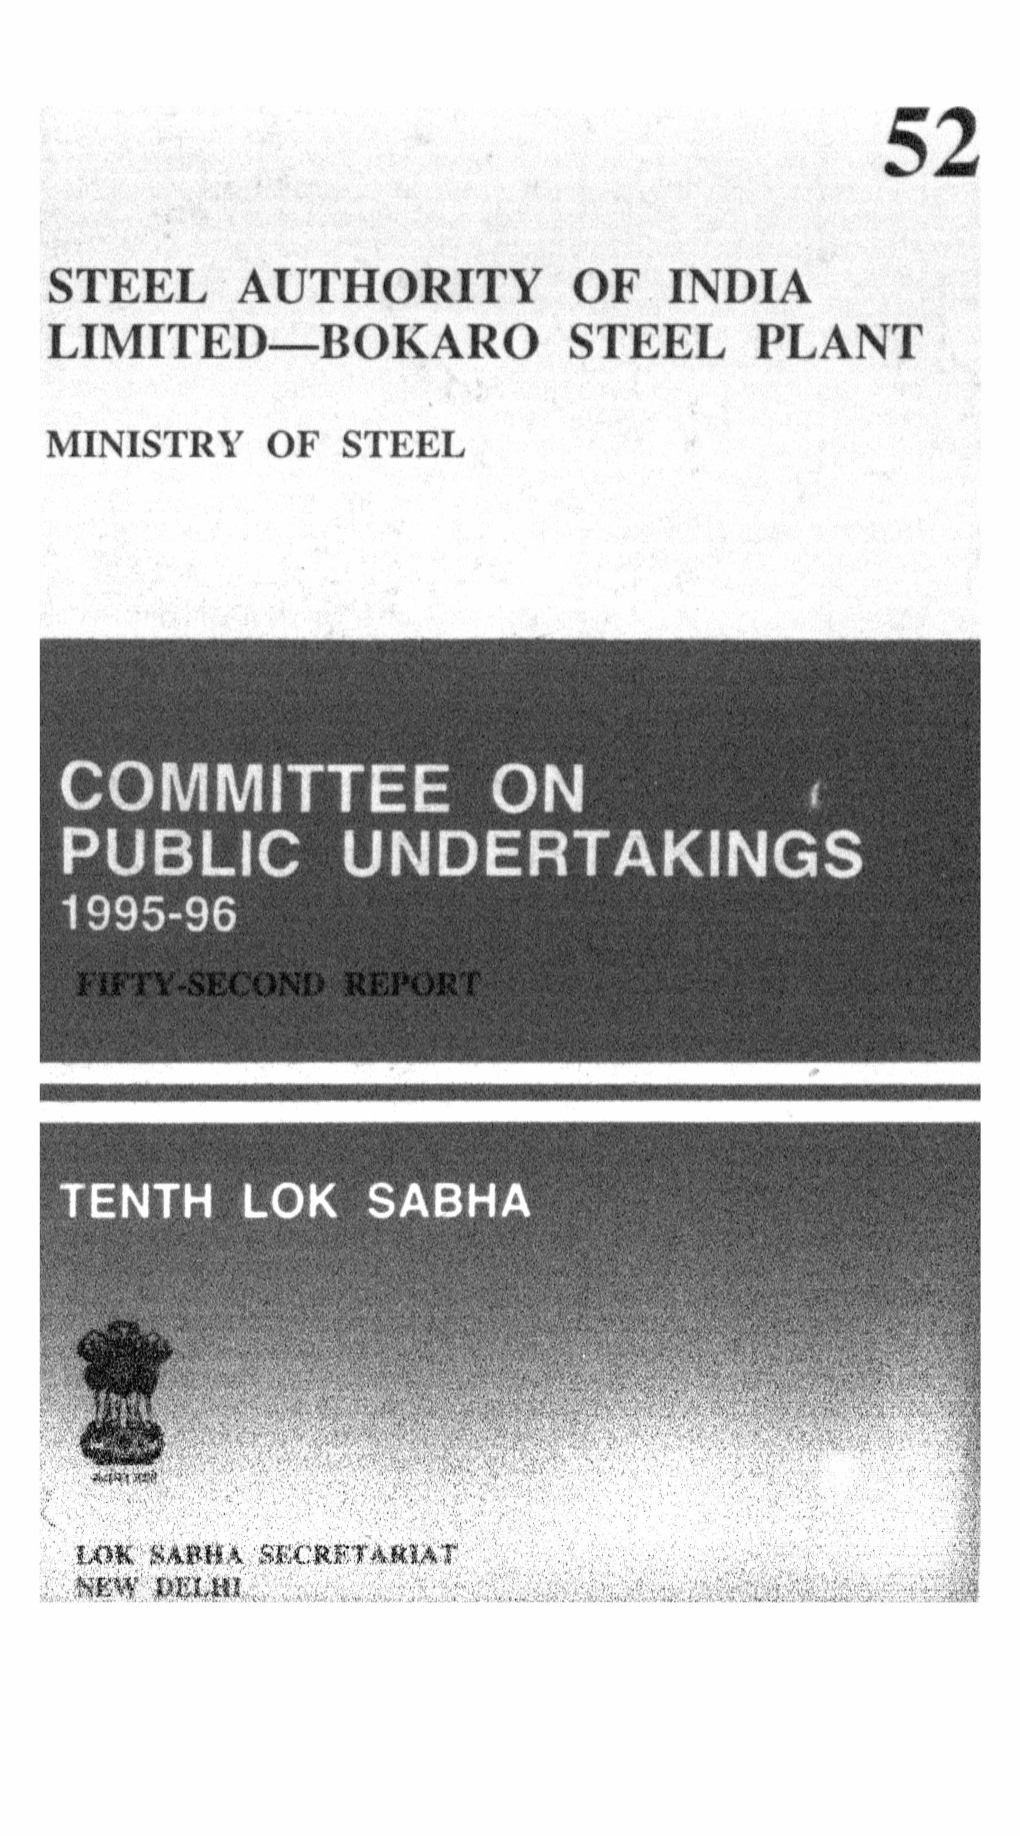 Steel Authority of India Limited-Bokaro Steel Plant